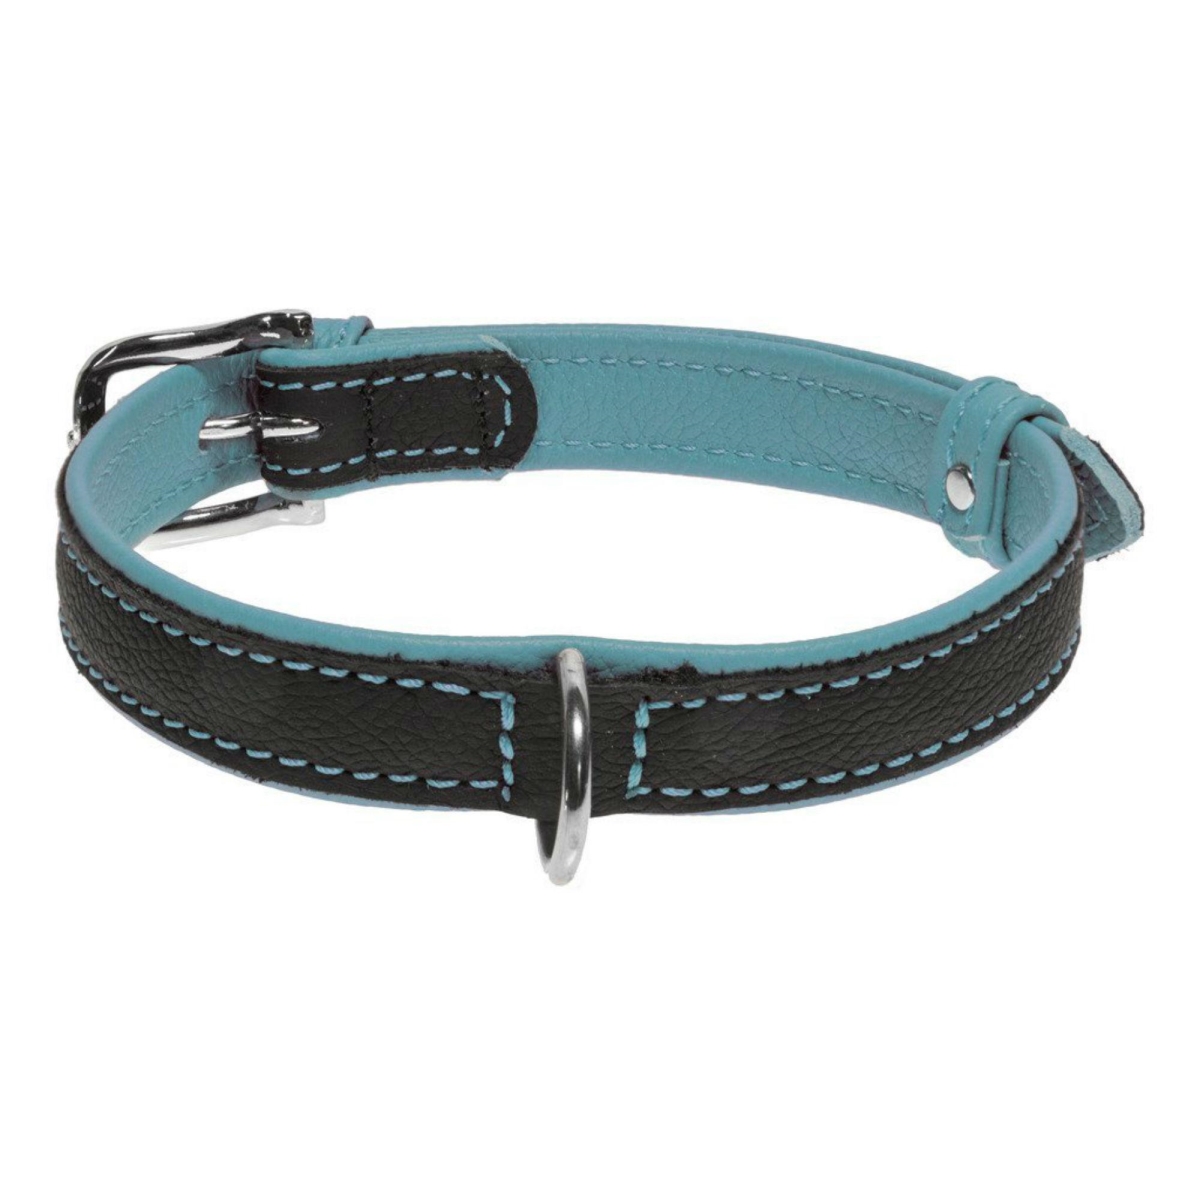 Soft Leather Dual Color Dog Collar, Teal - Medium